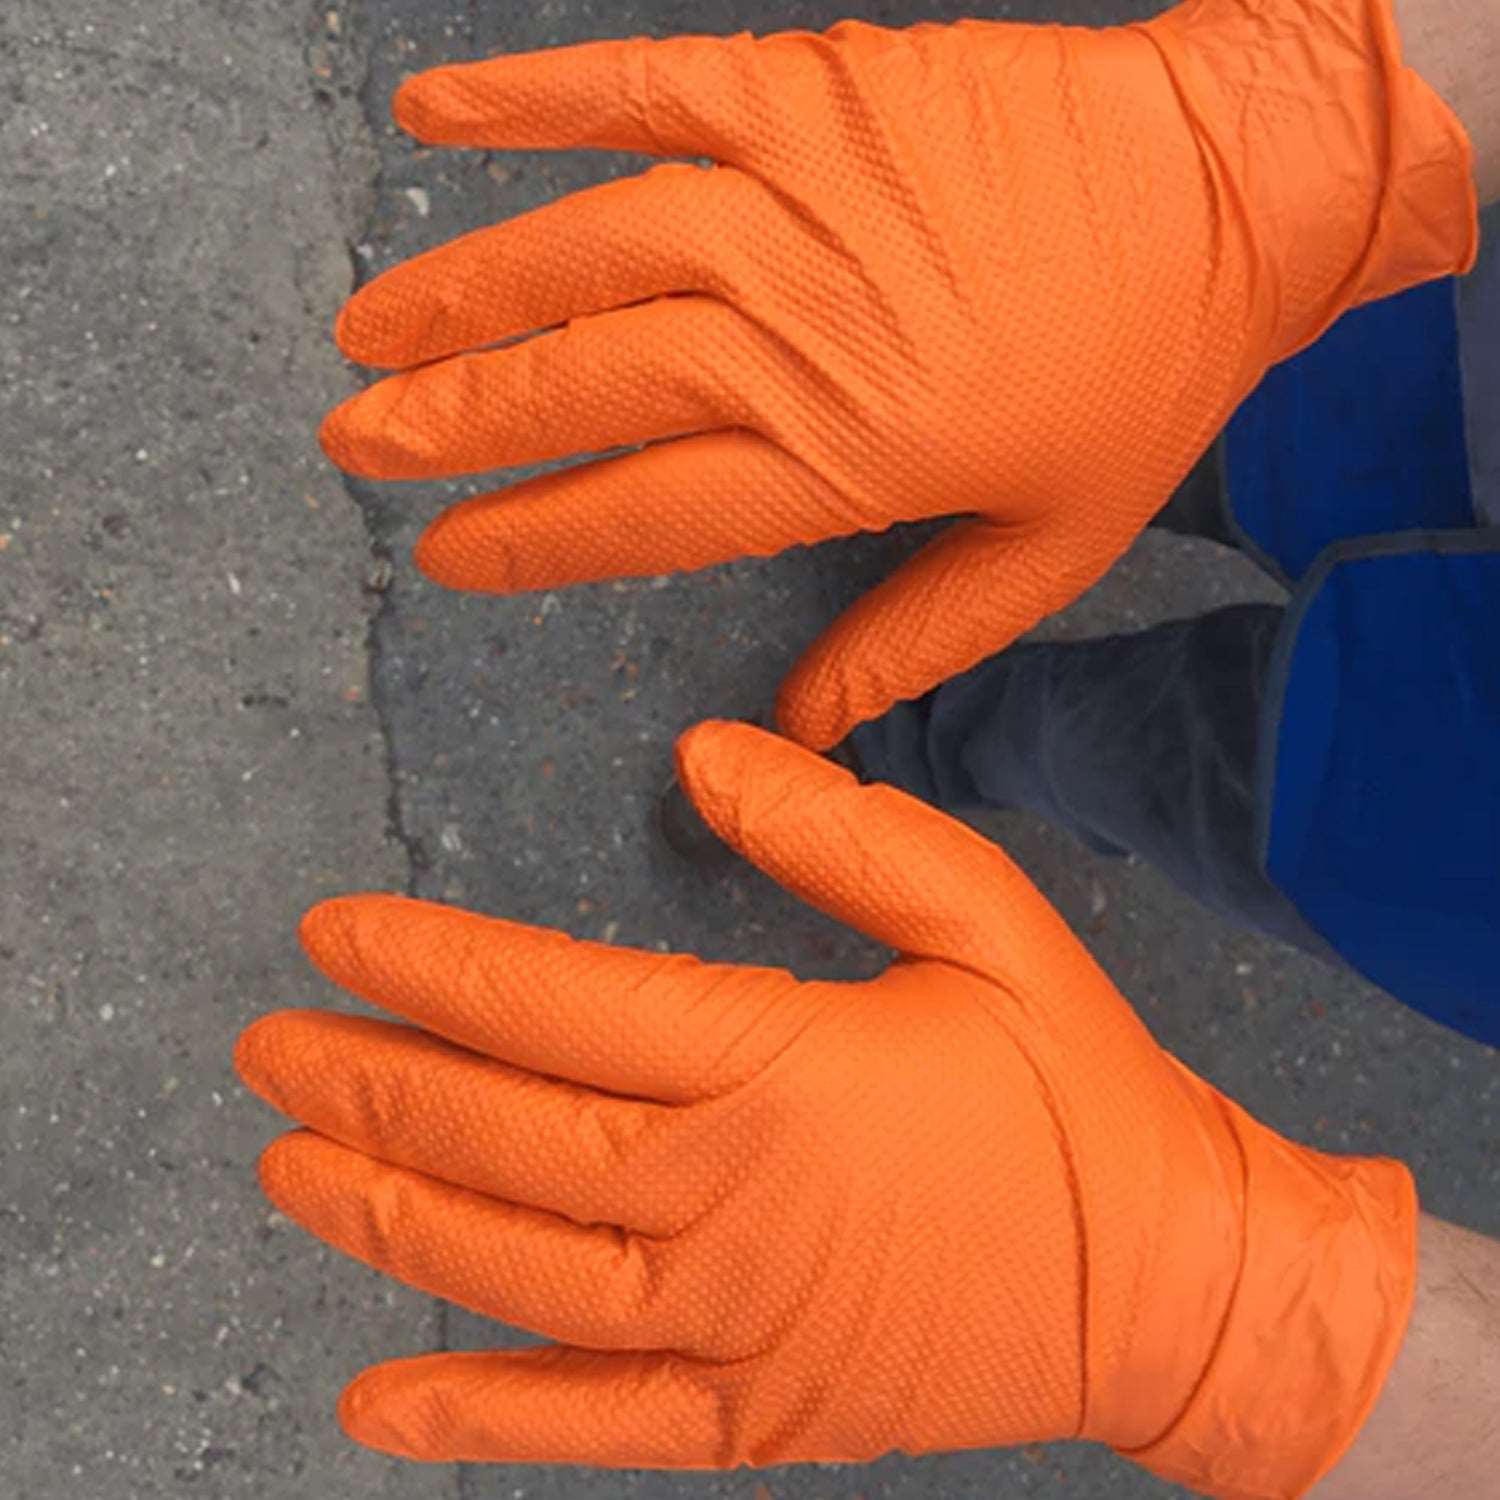 2 Pair Large Orange Gloves For Types Of Purposes Like Washing Utensils, Gardening And Cleaning Toilet Etc